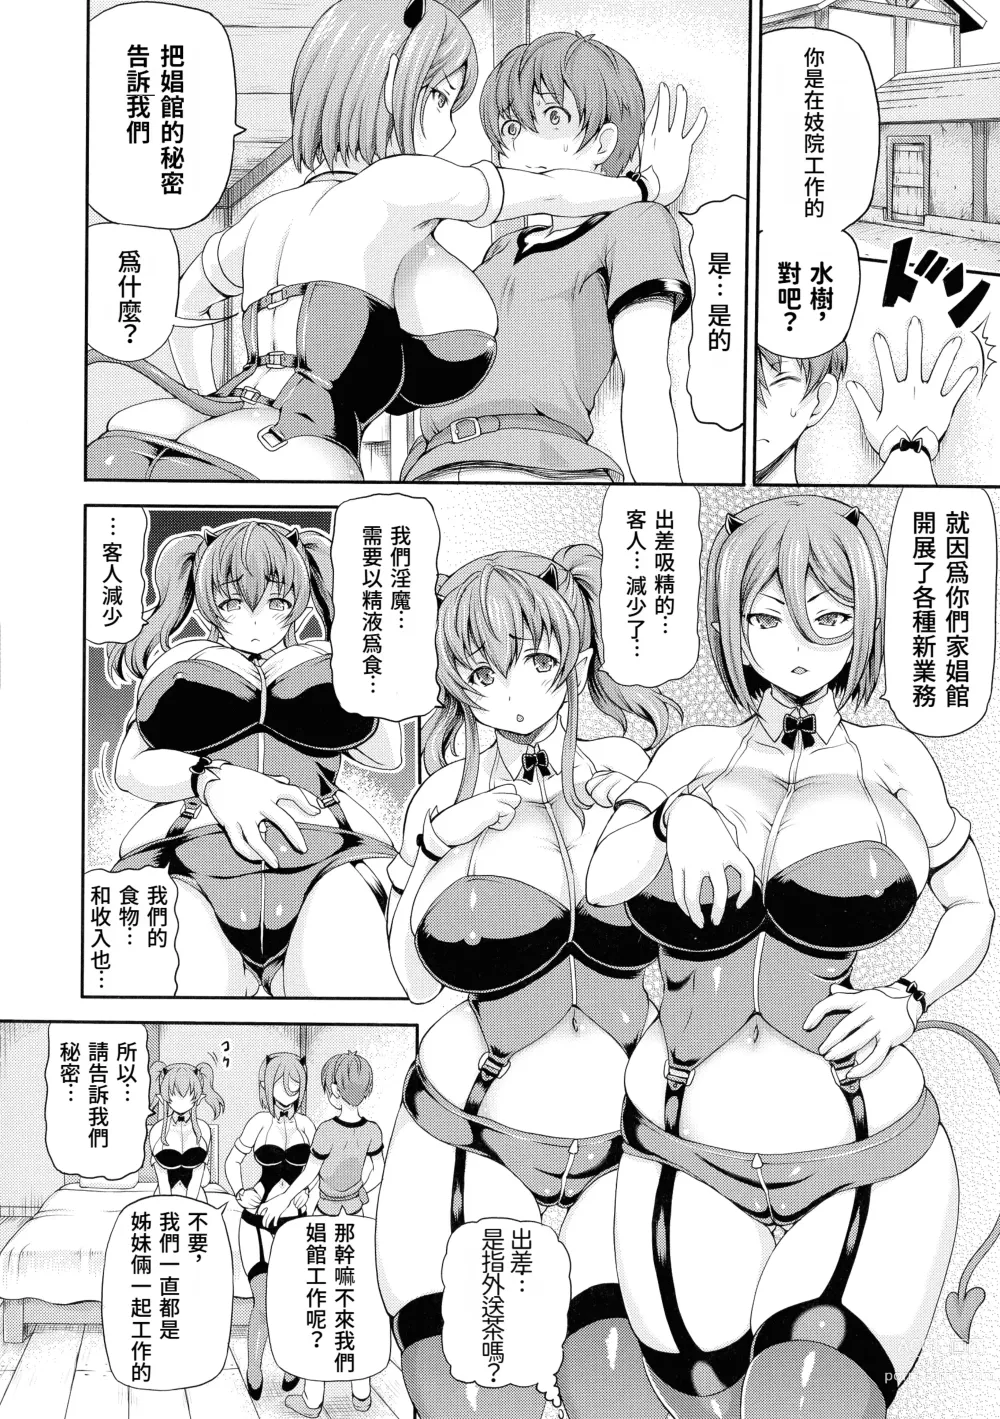 Page 26 of manga Isekai Shoukan 2 Ch. 1-4, 6-8